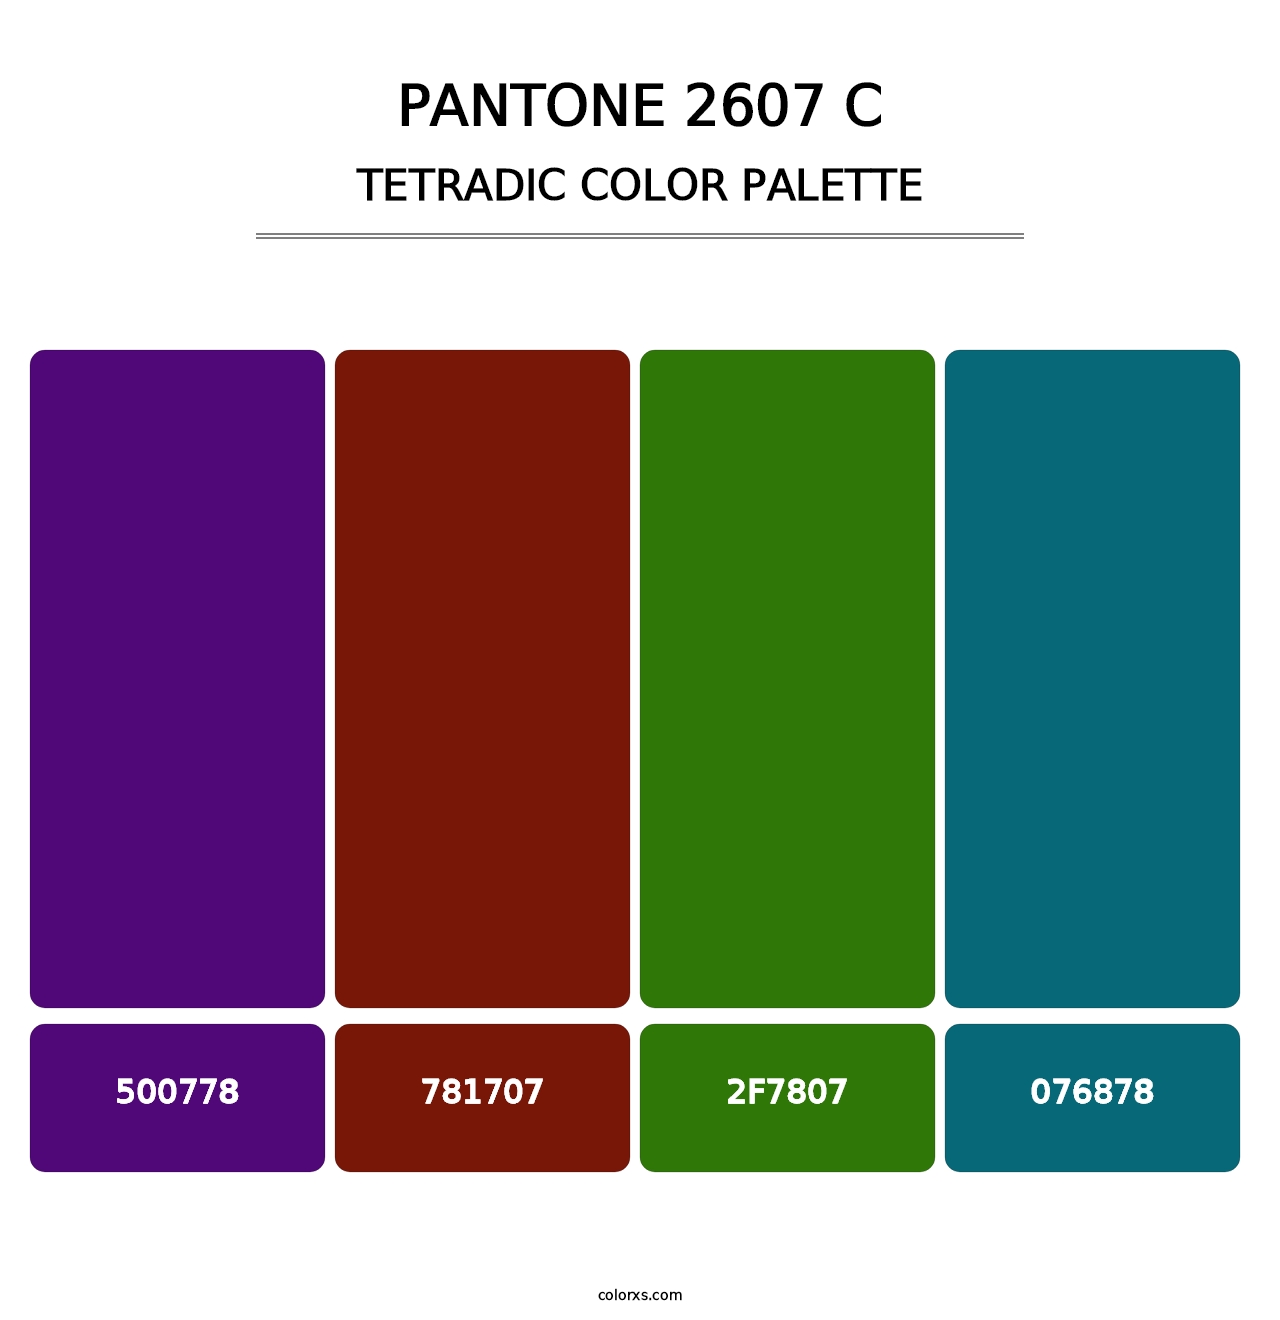 PANTONE 2607 C - Tetradic Color Palette